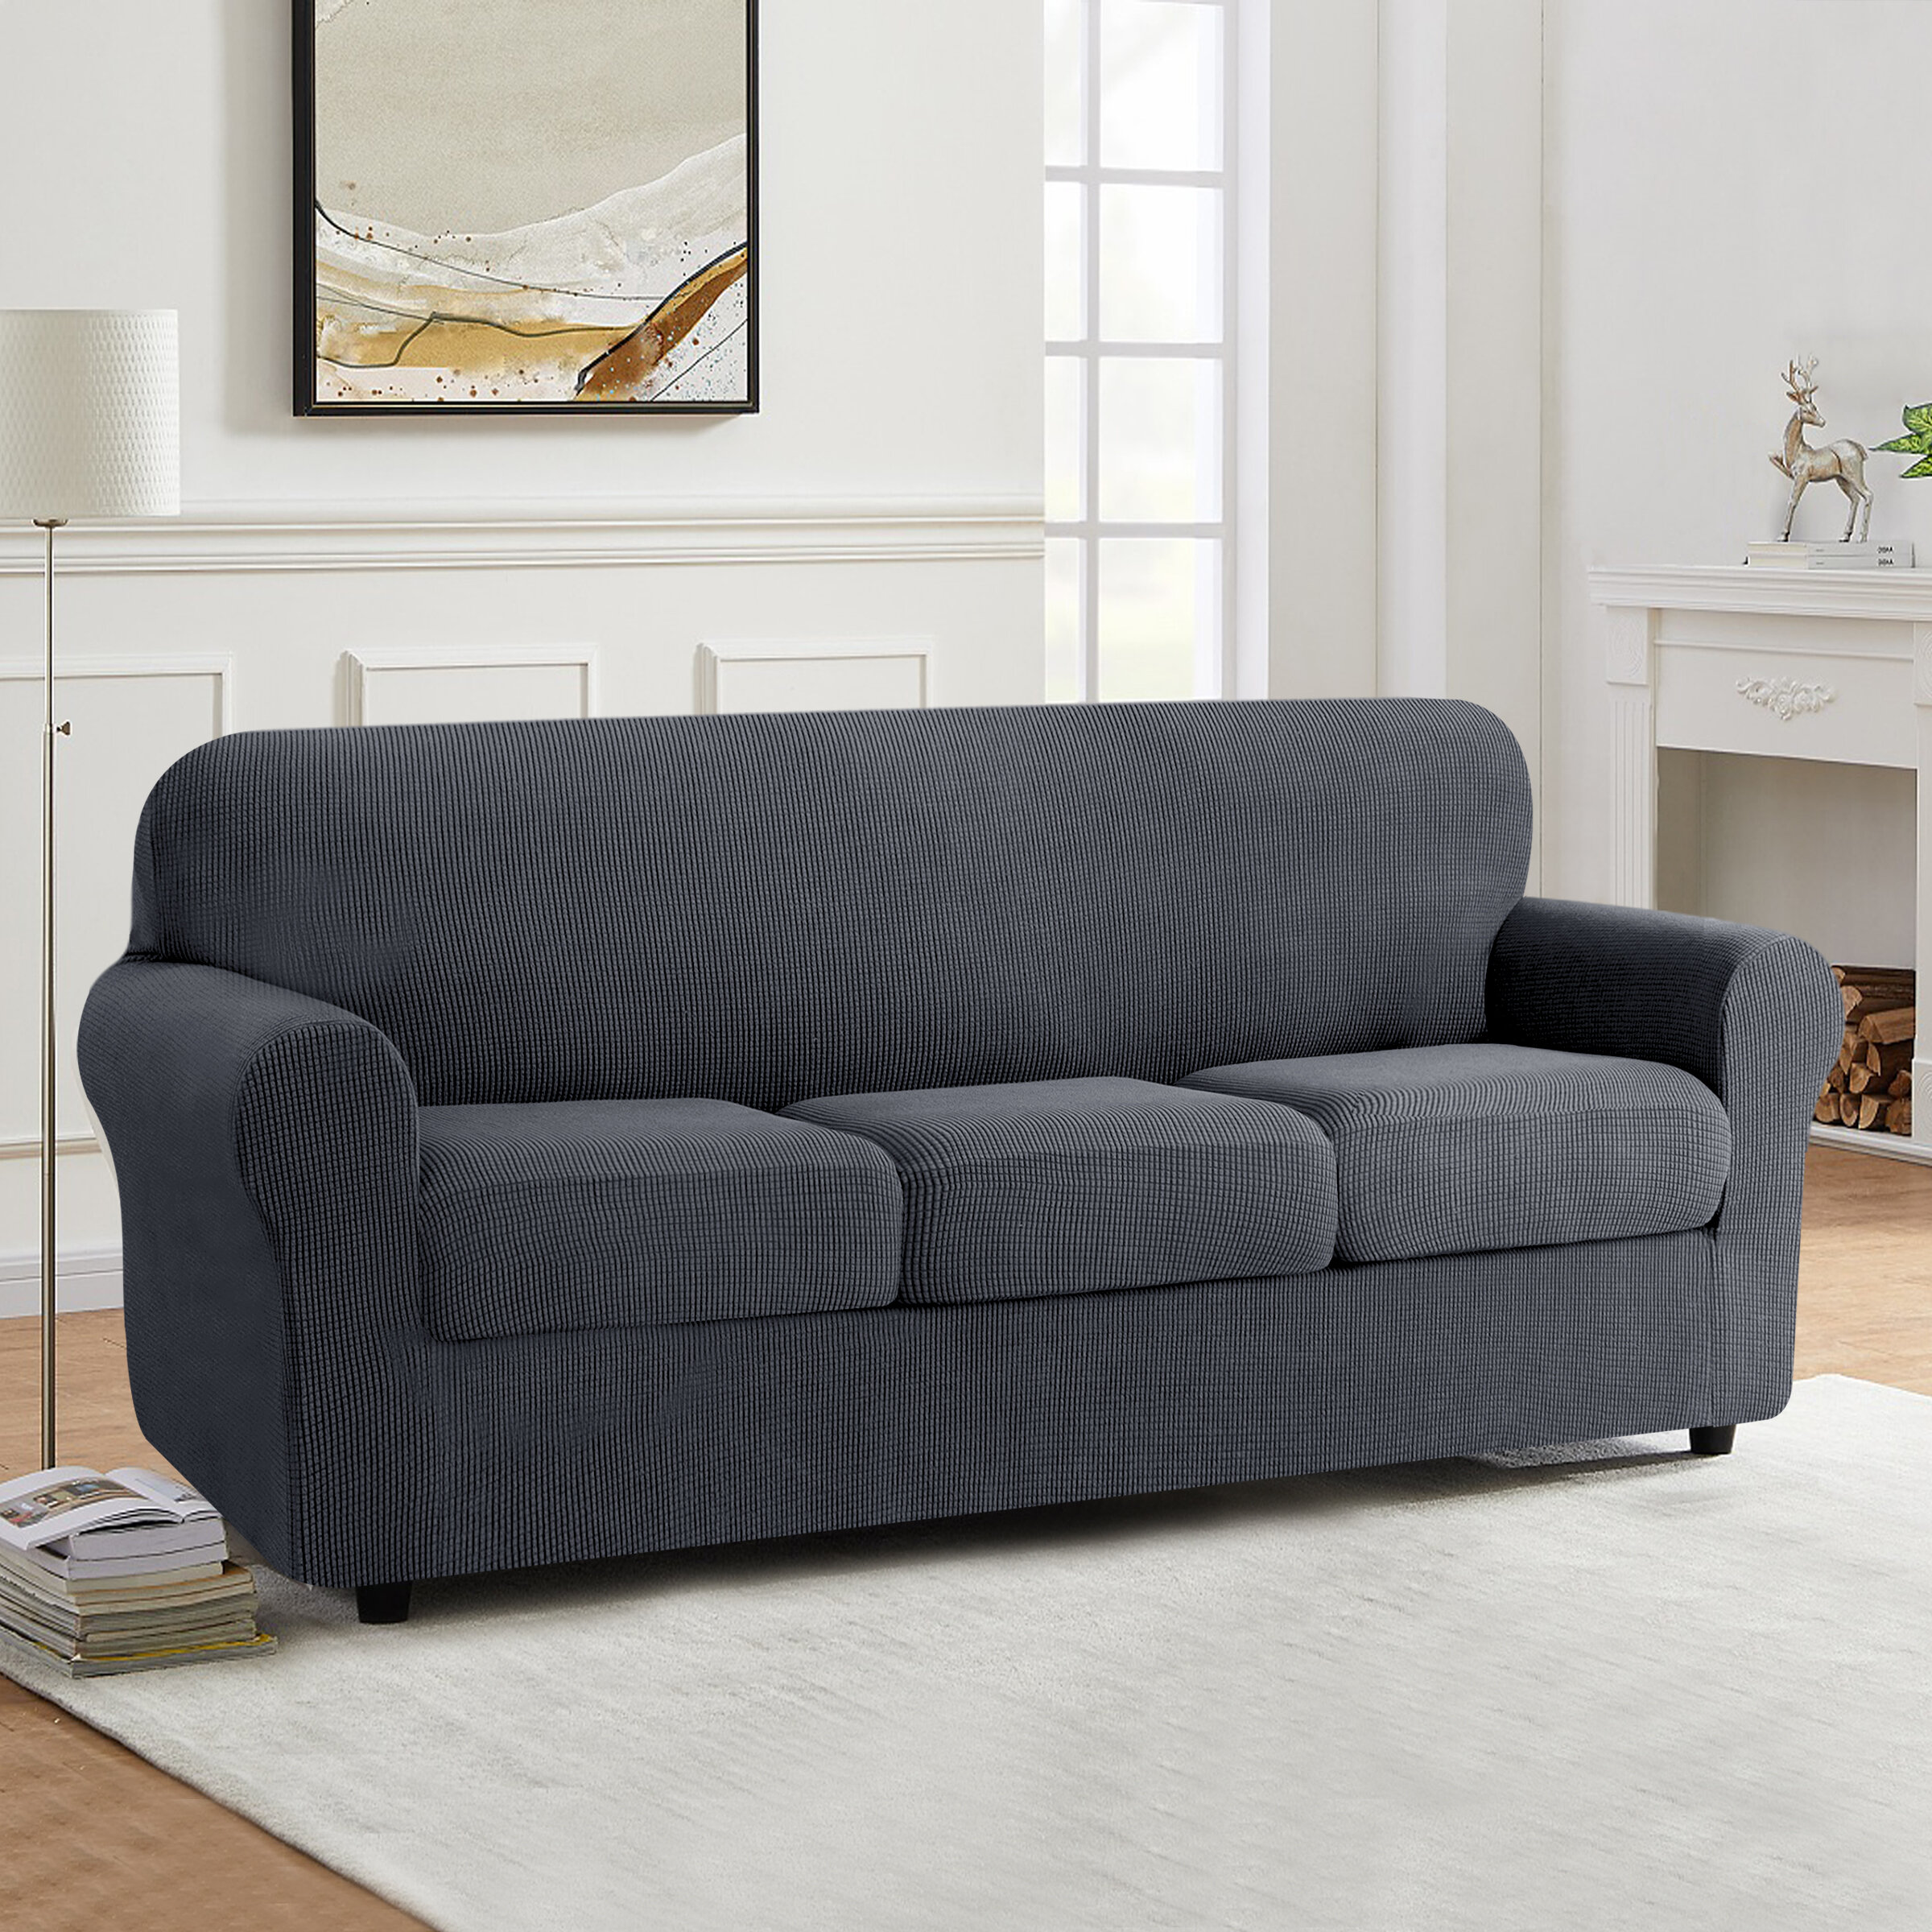 Light Gray Seater Slip Loveseat Stretch Durable Sofa Cushion Cover Spandex Elast 